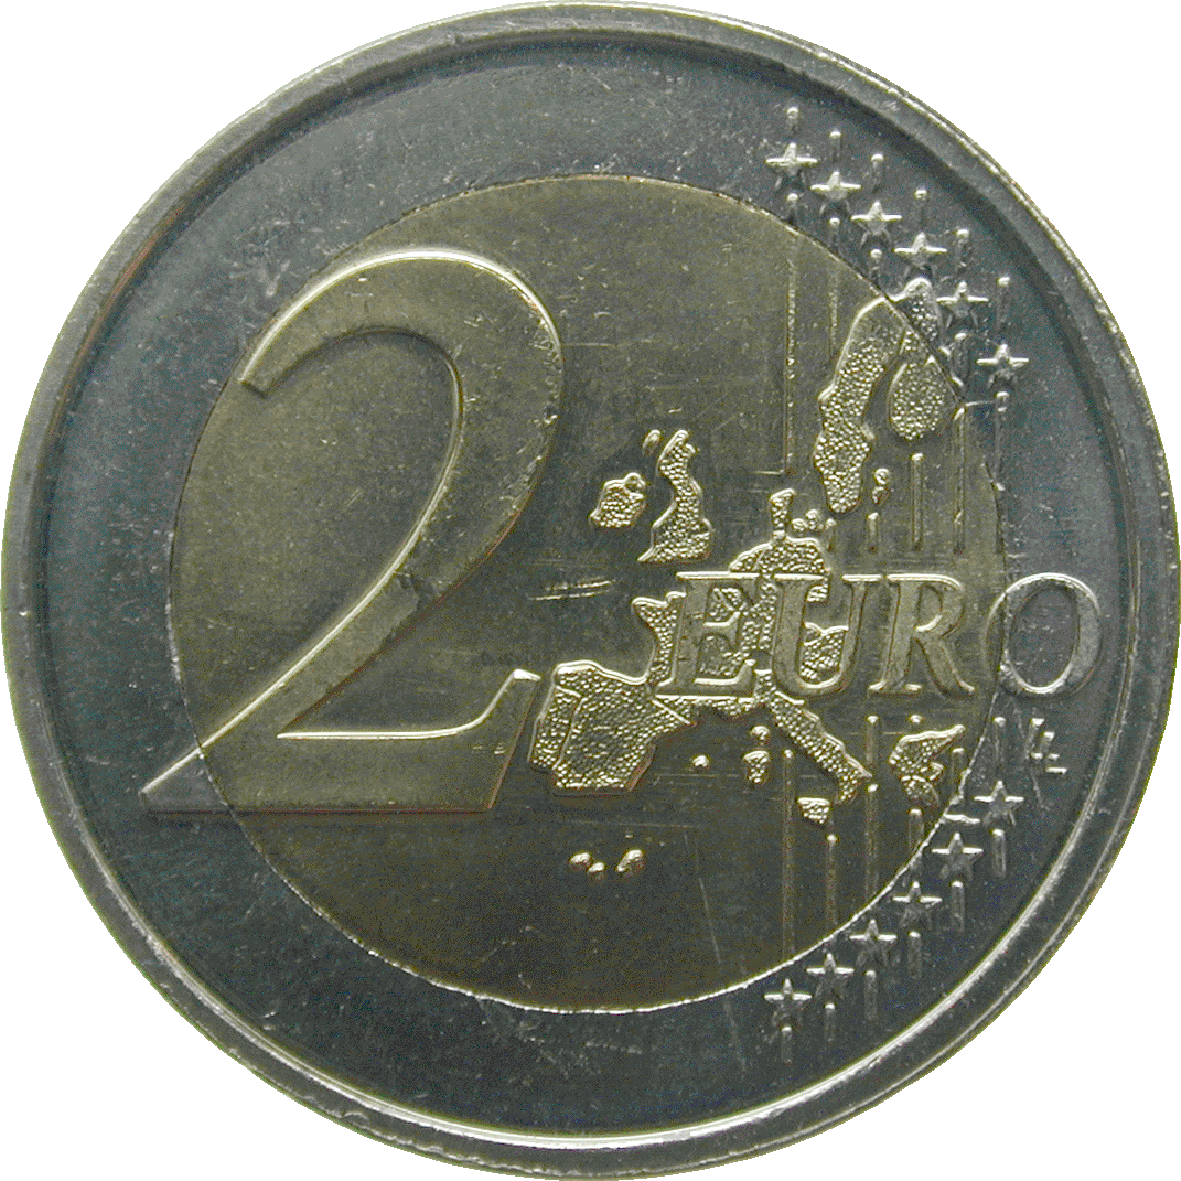 Grossherzogtum Luxemburg, Henri, 2 Euro 2002 (obverse)